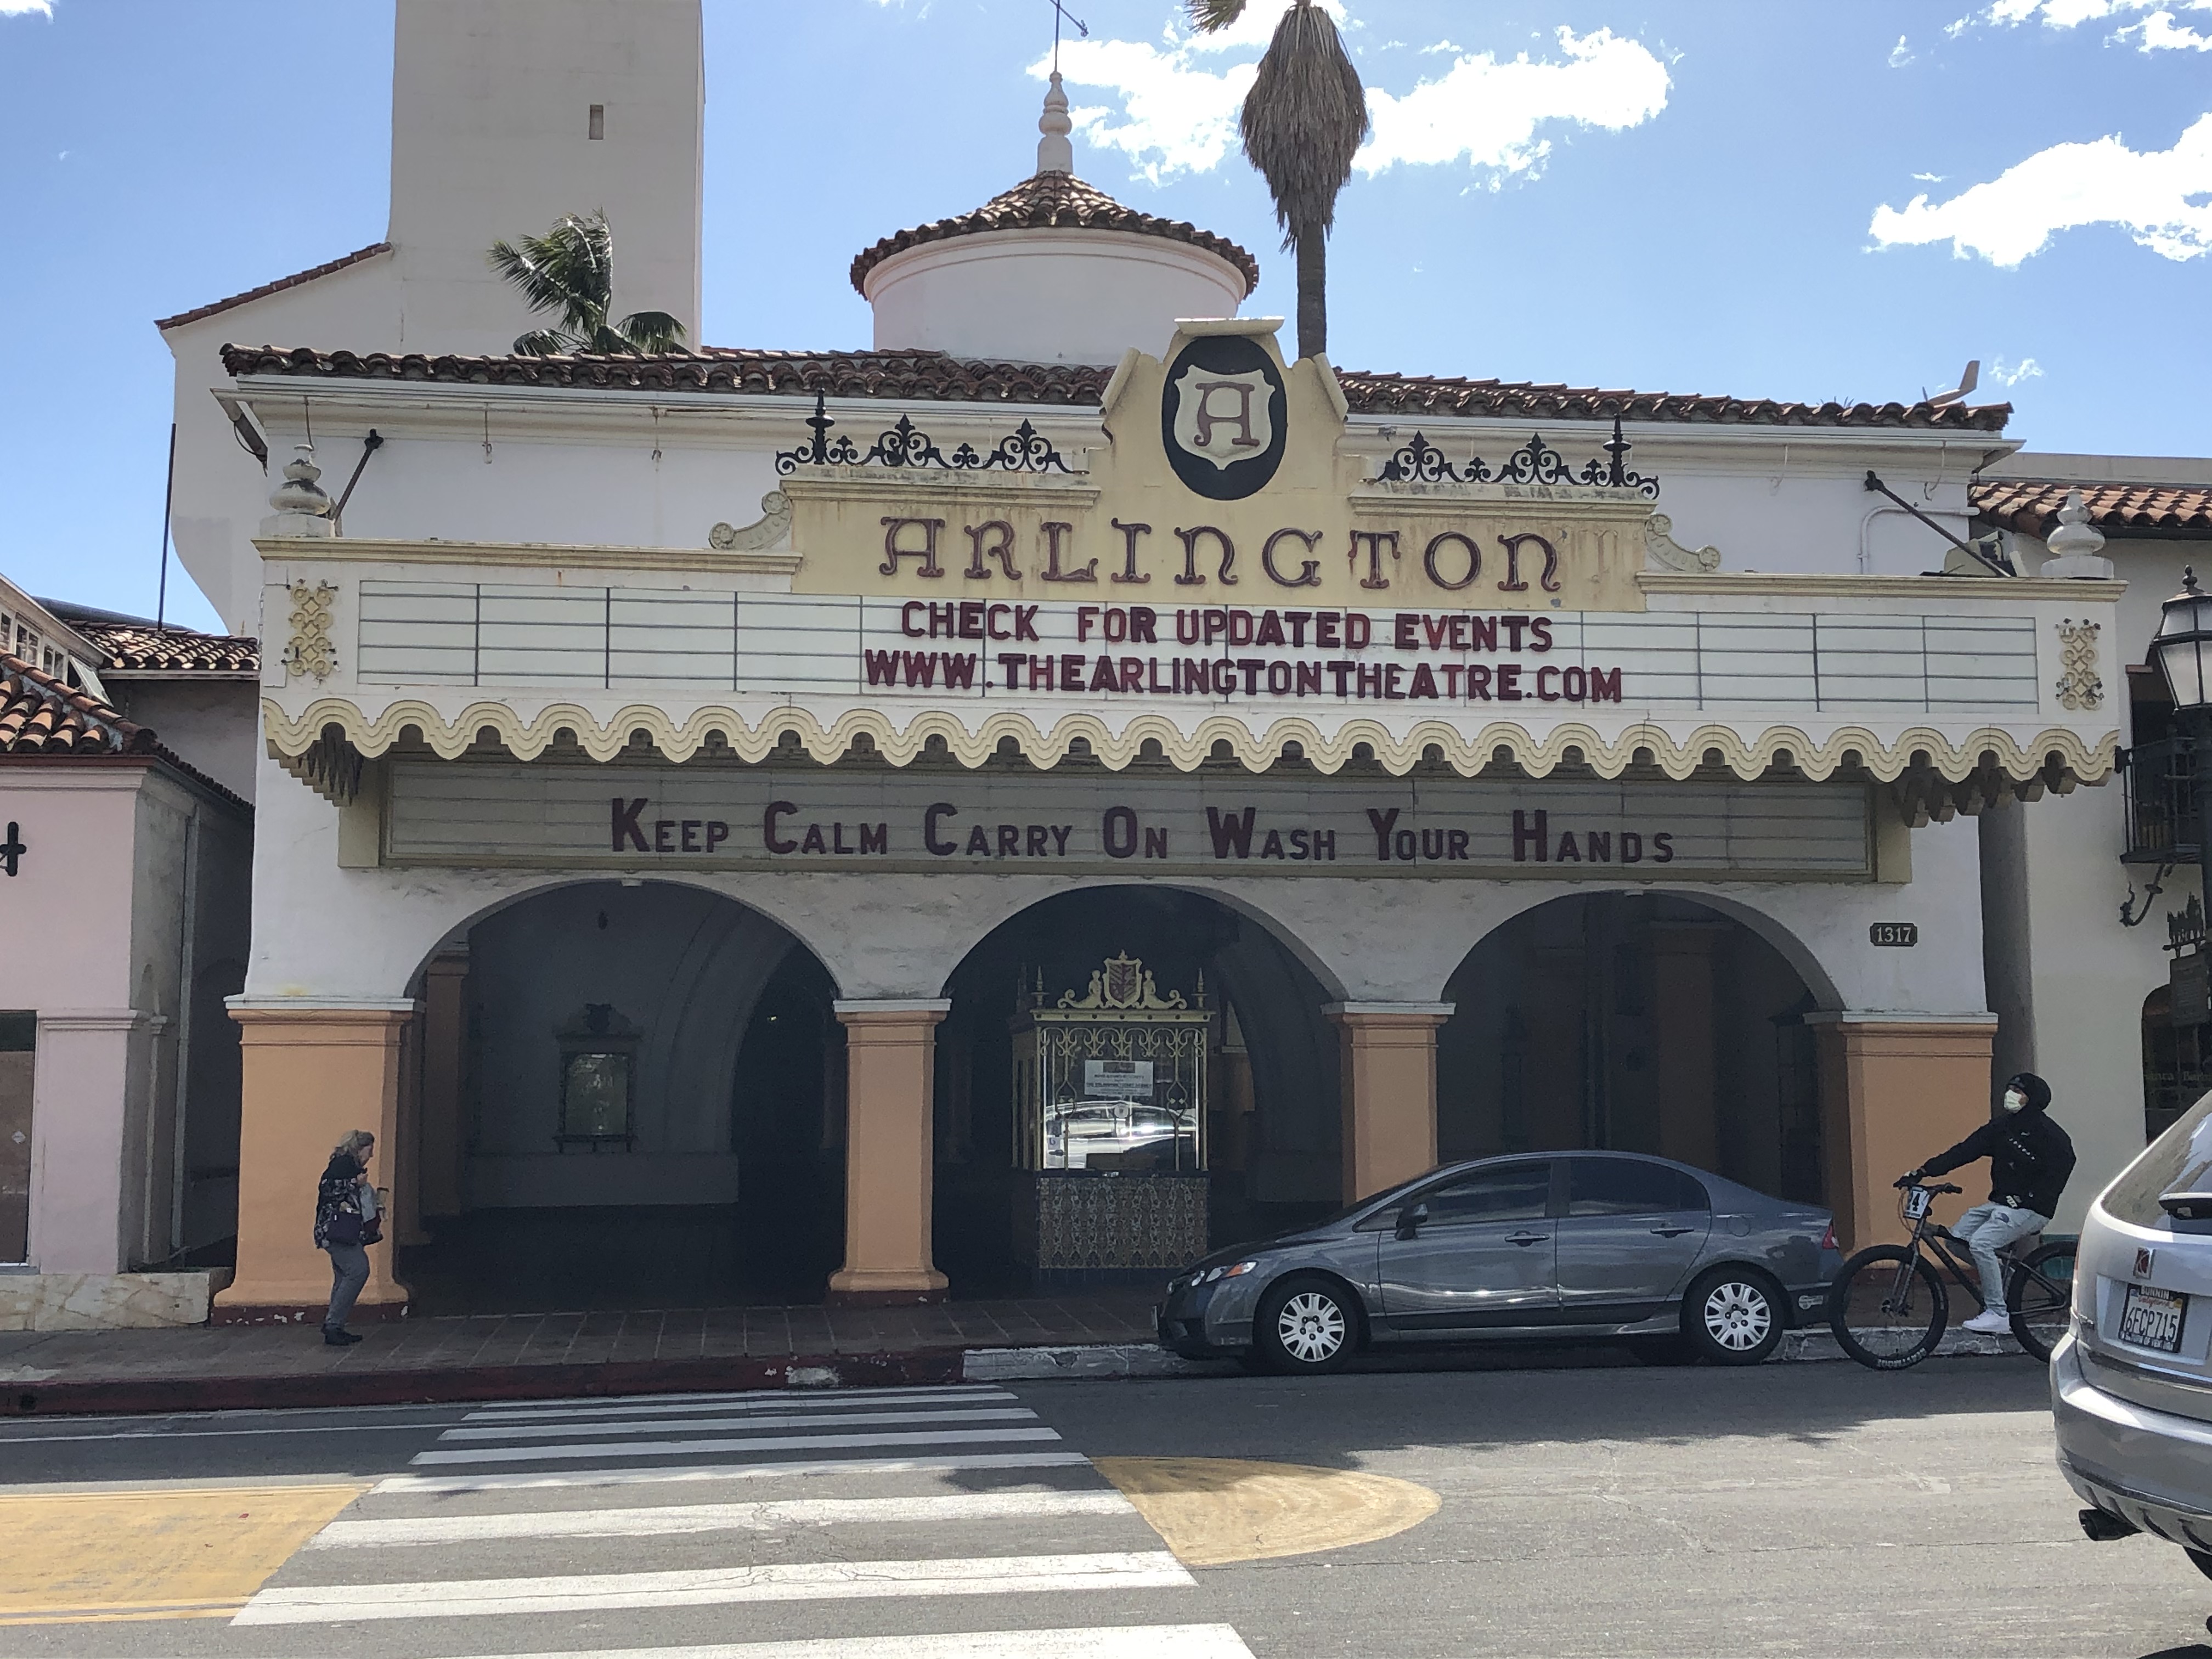 Santa Barbara Movie Theaters Close - The Santa Barbara Independent